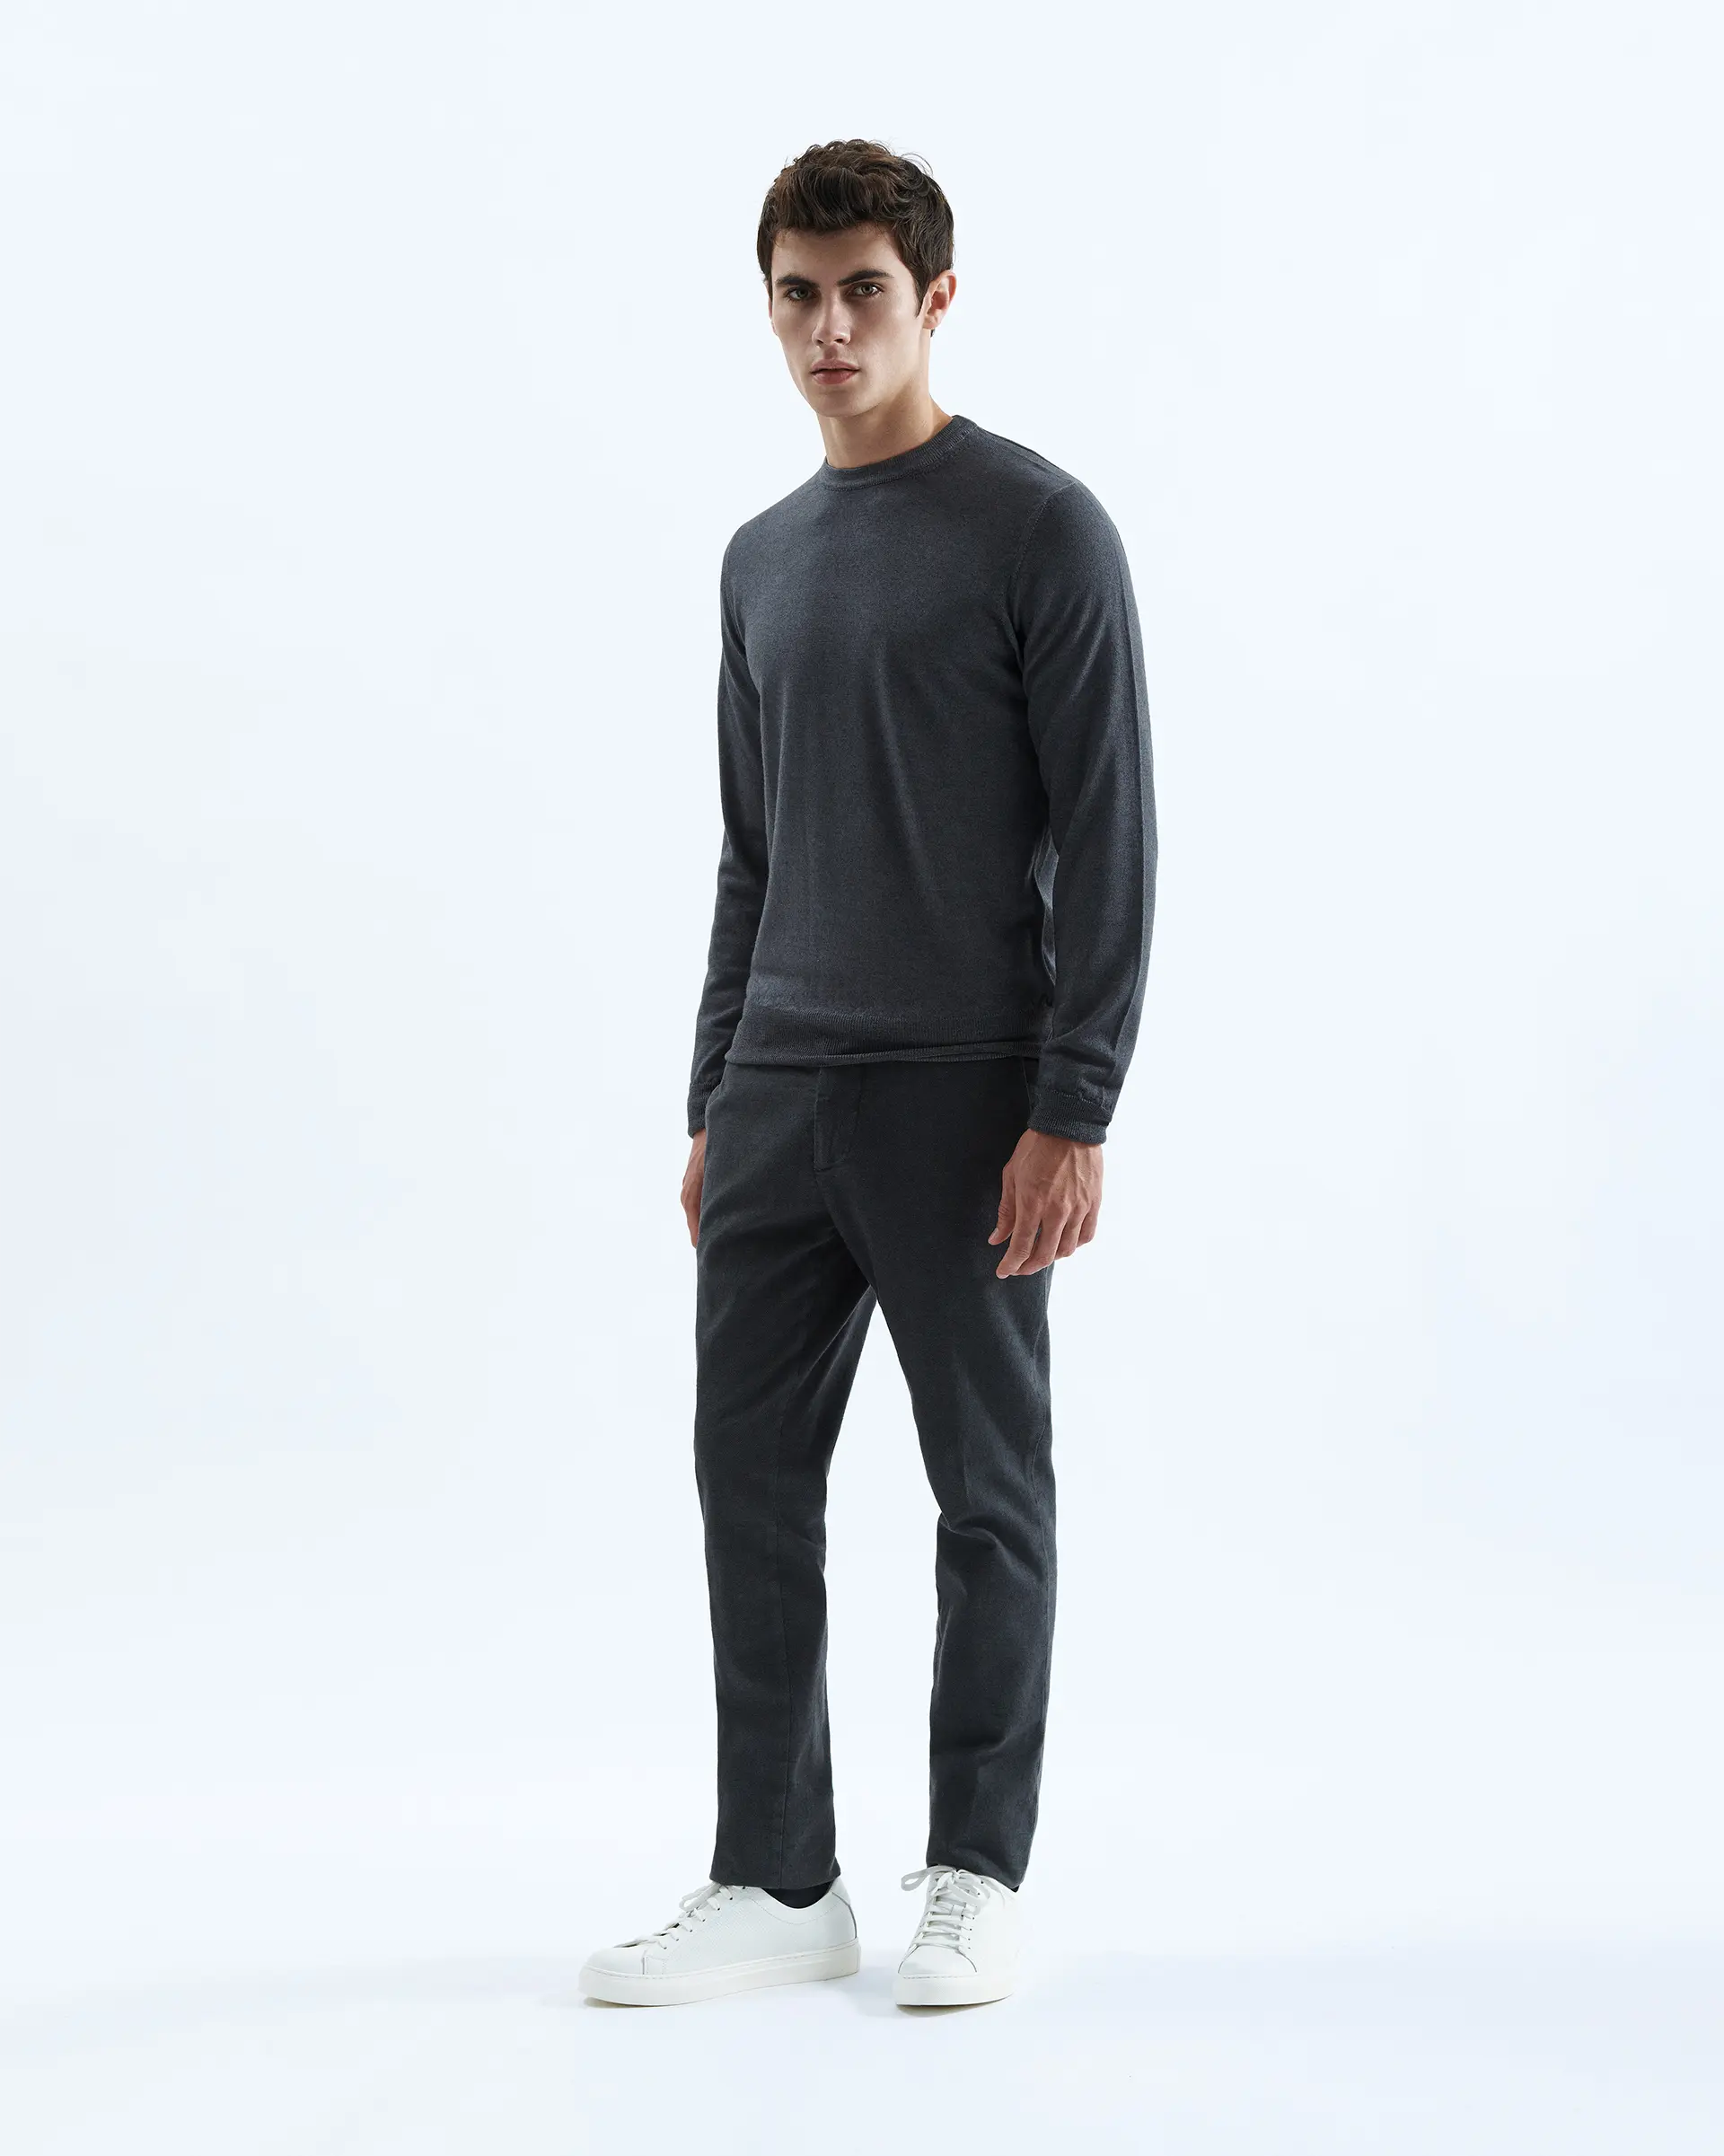 Charcoal grey Merino Wool - Crewneck sweaters